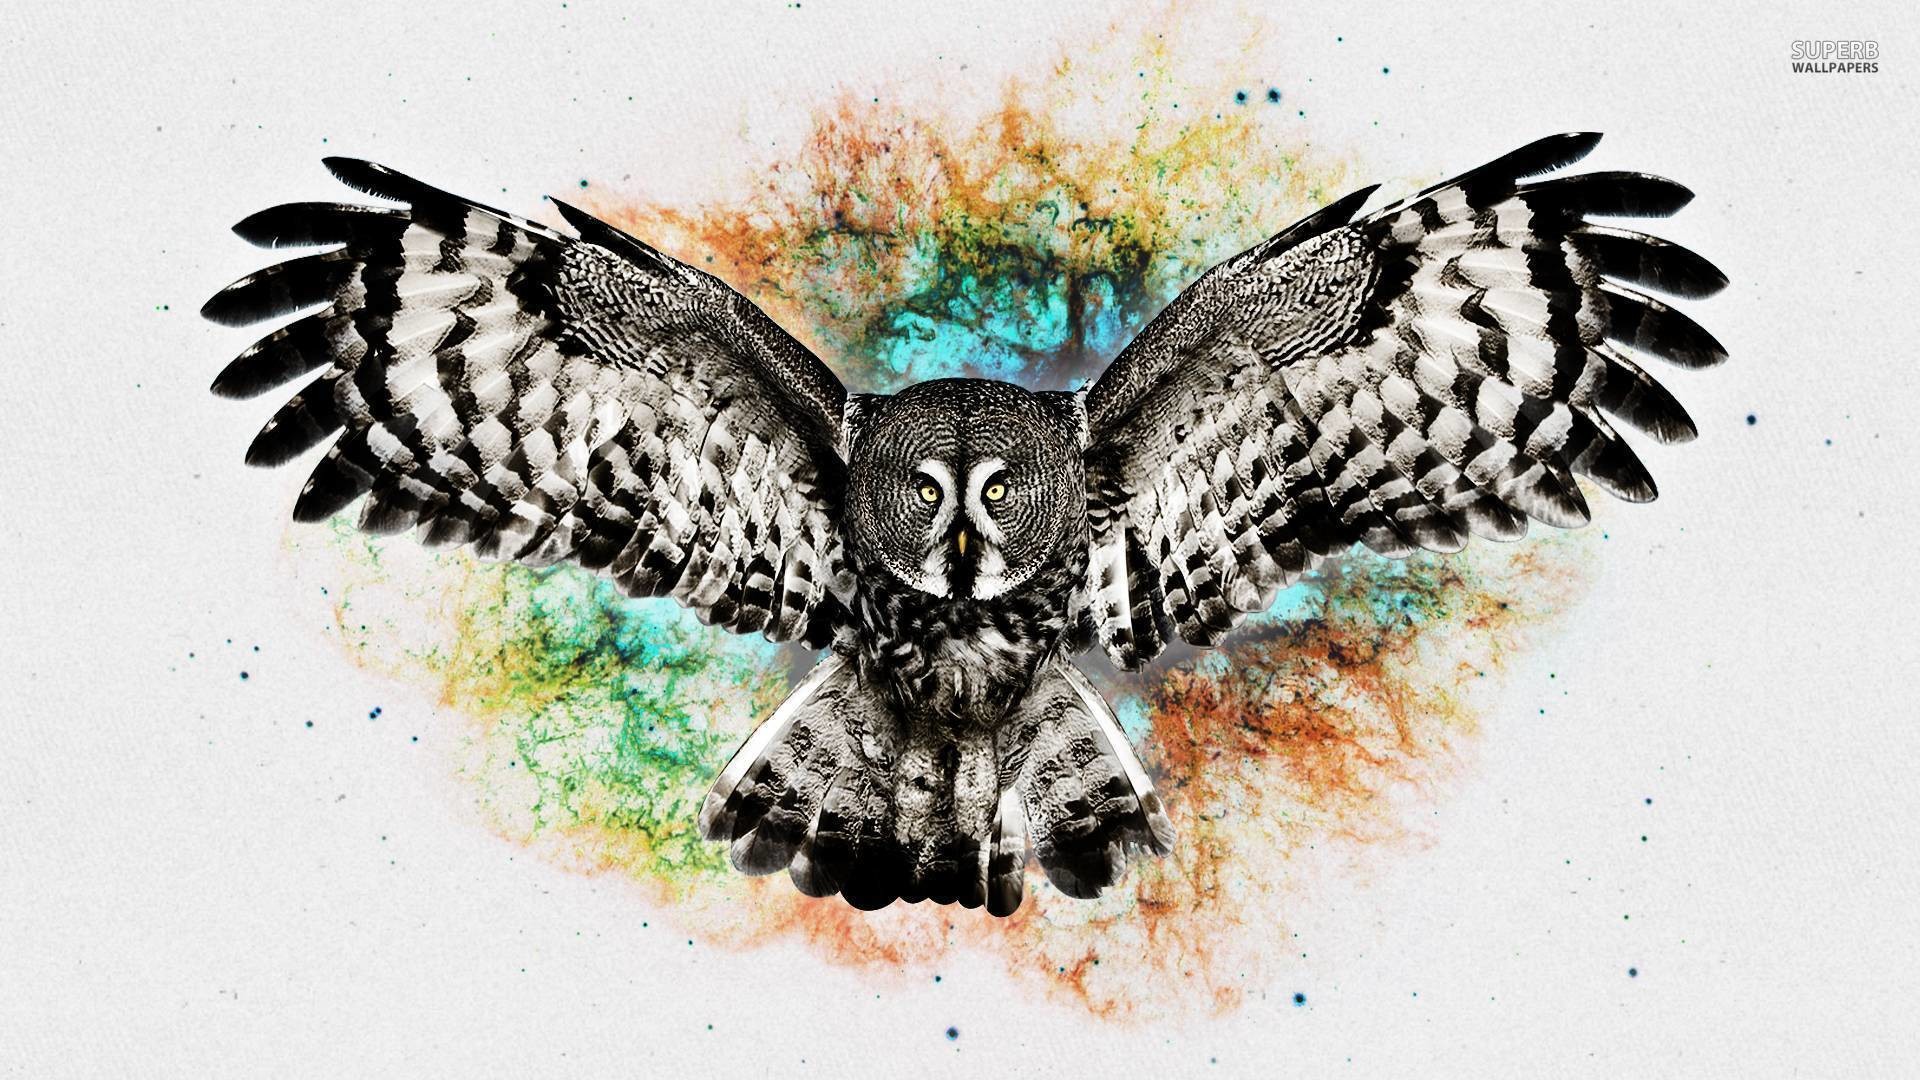 1920x1080 Owl wallpaper - Digital Art wallpapers - #